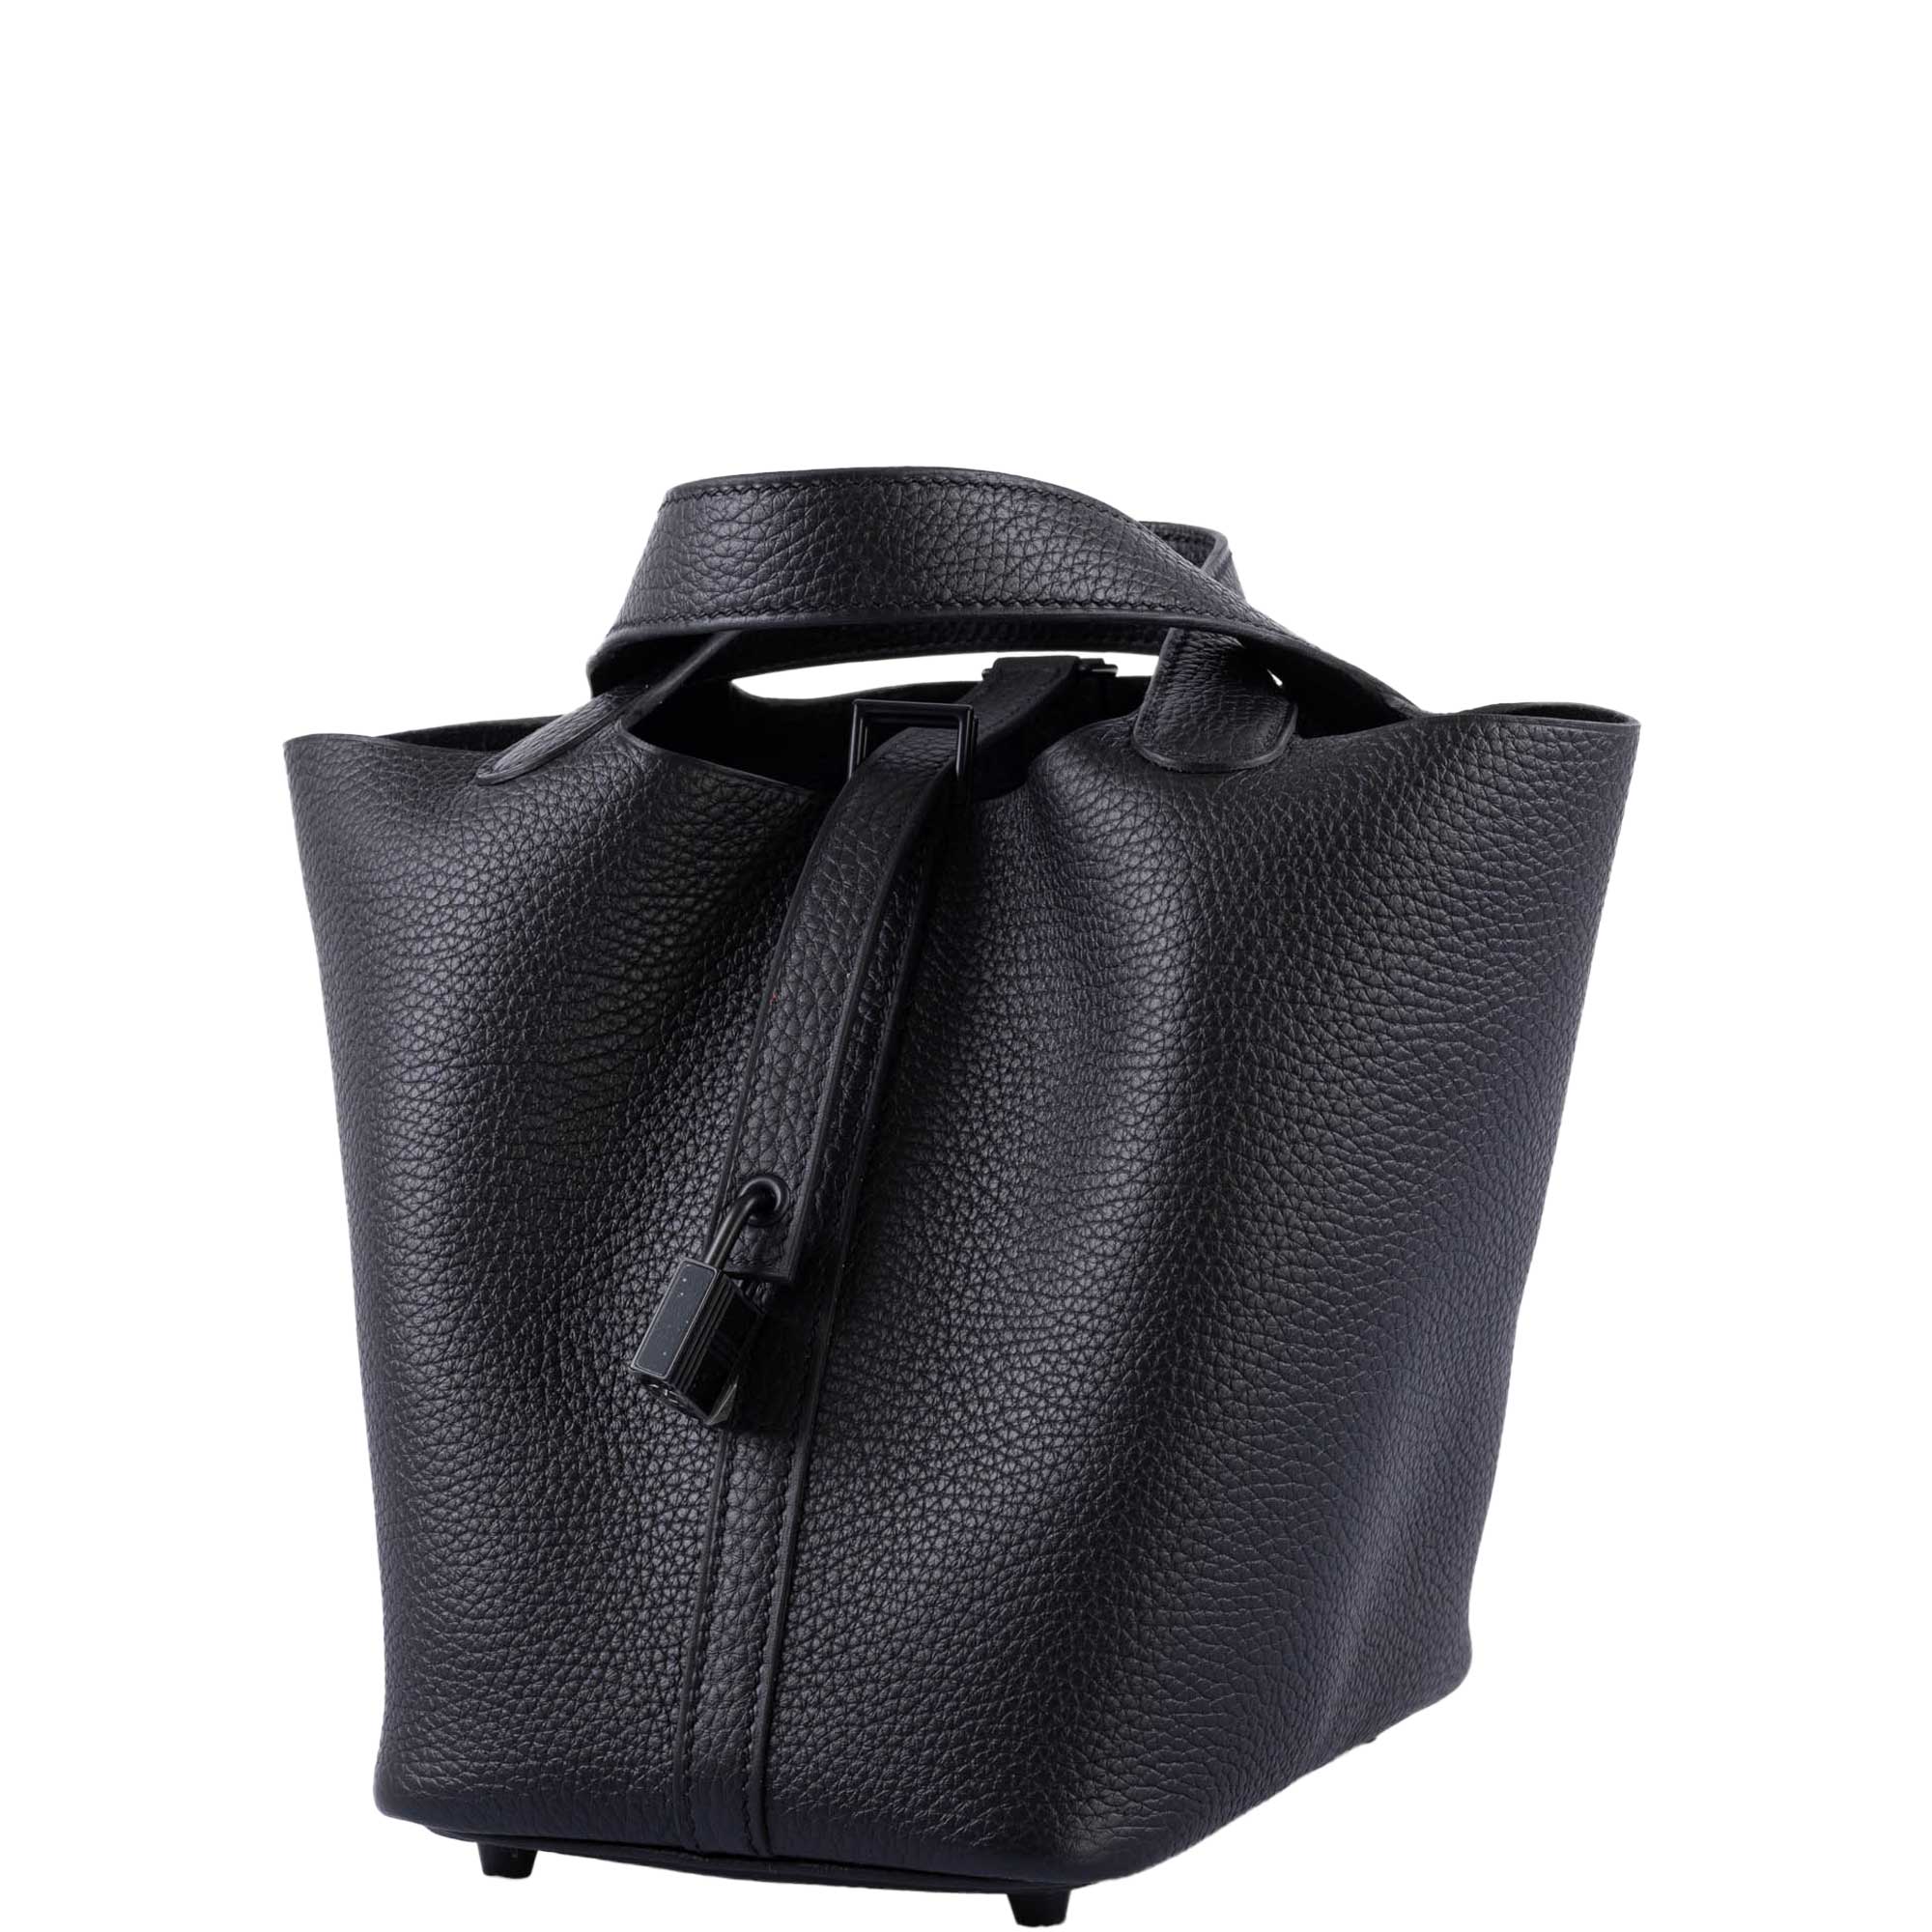 Hermes 28cm Black Togo Leather Picotin Bag